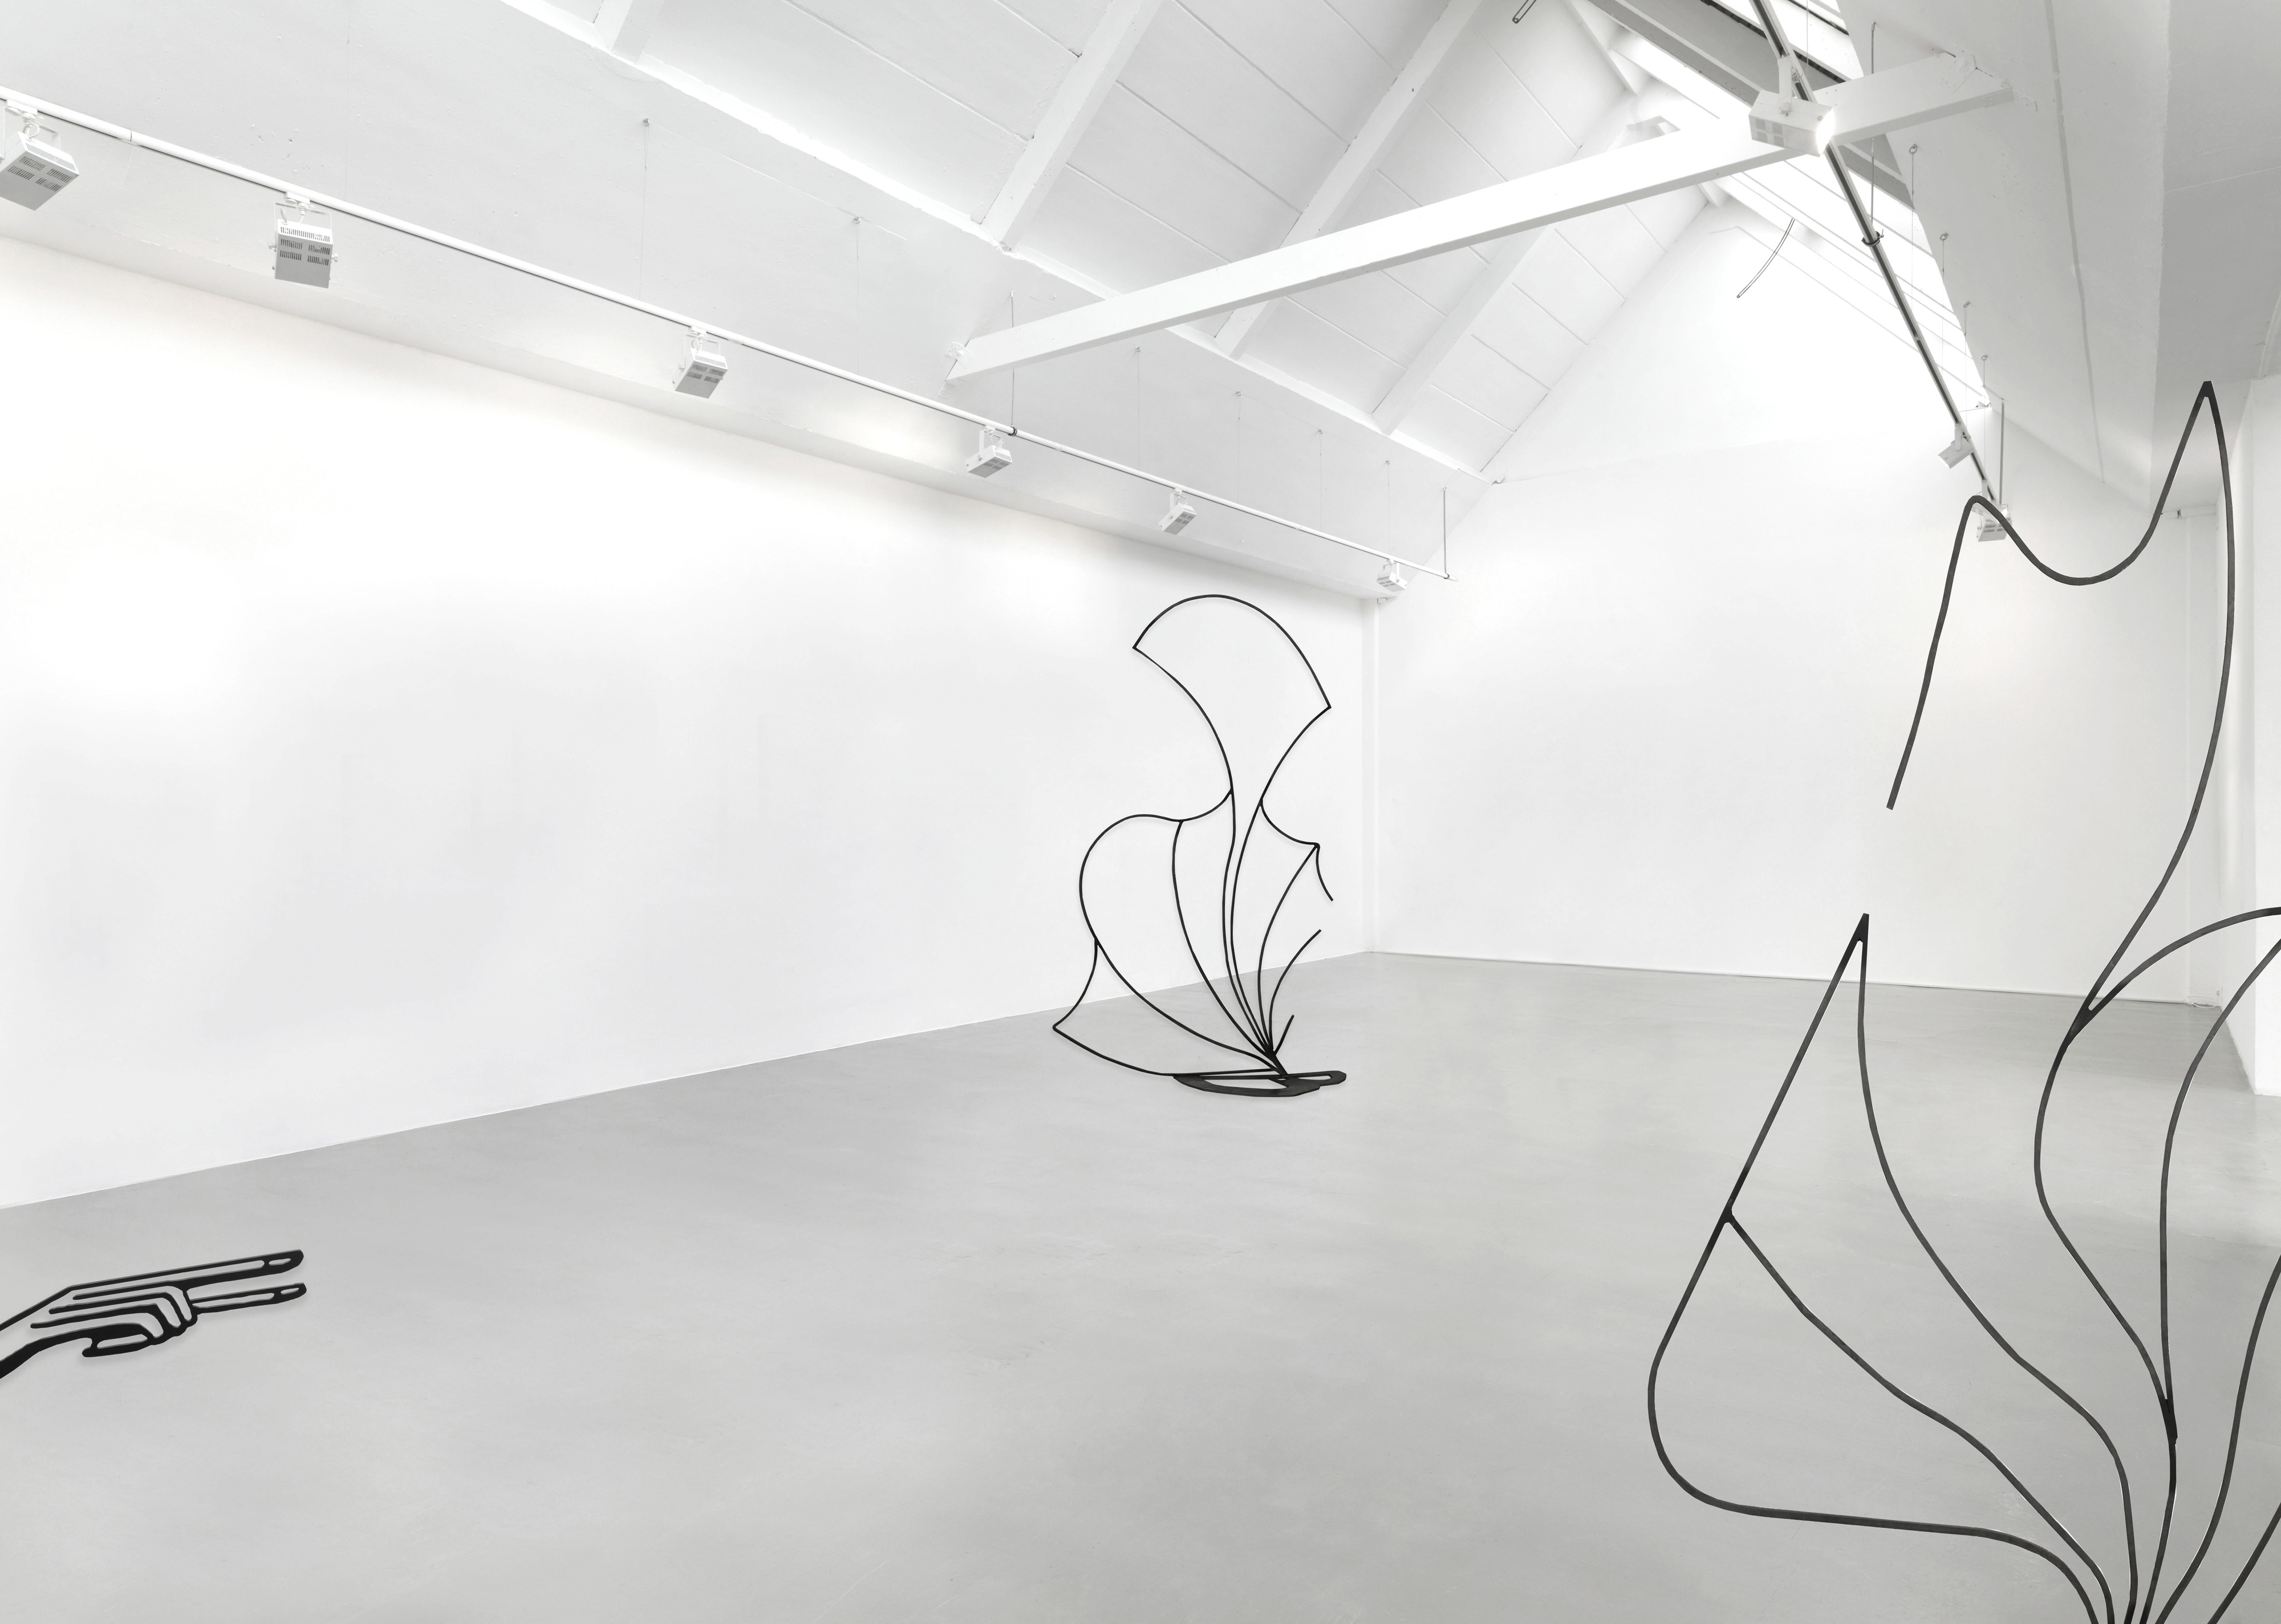 Galerie Barbara Thumm \ New Viewings #17 \ Karim Noureldin